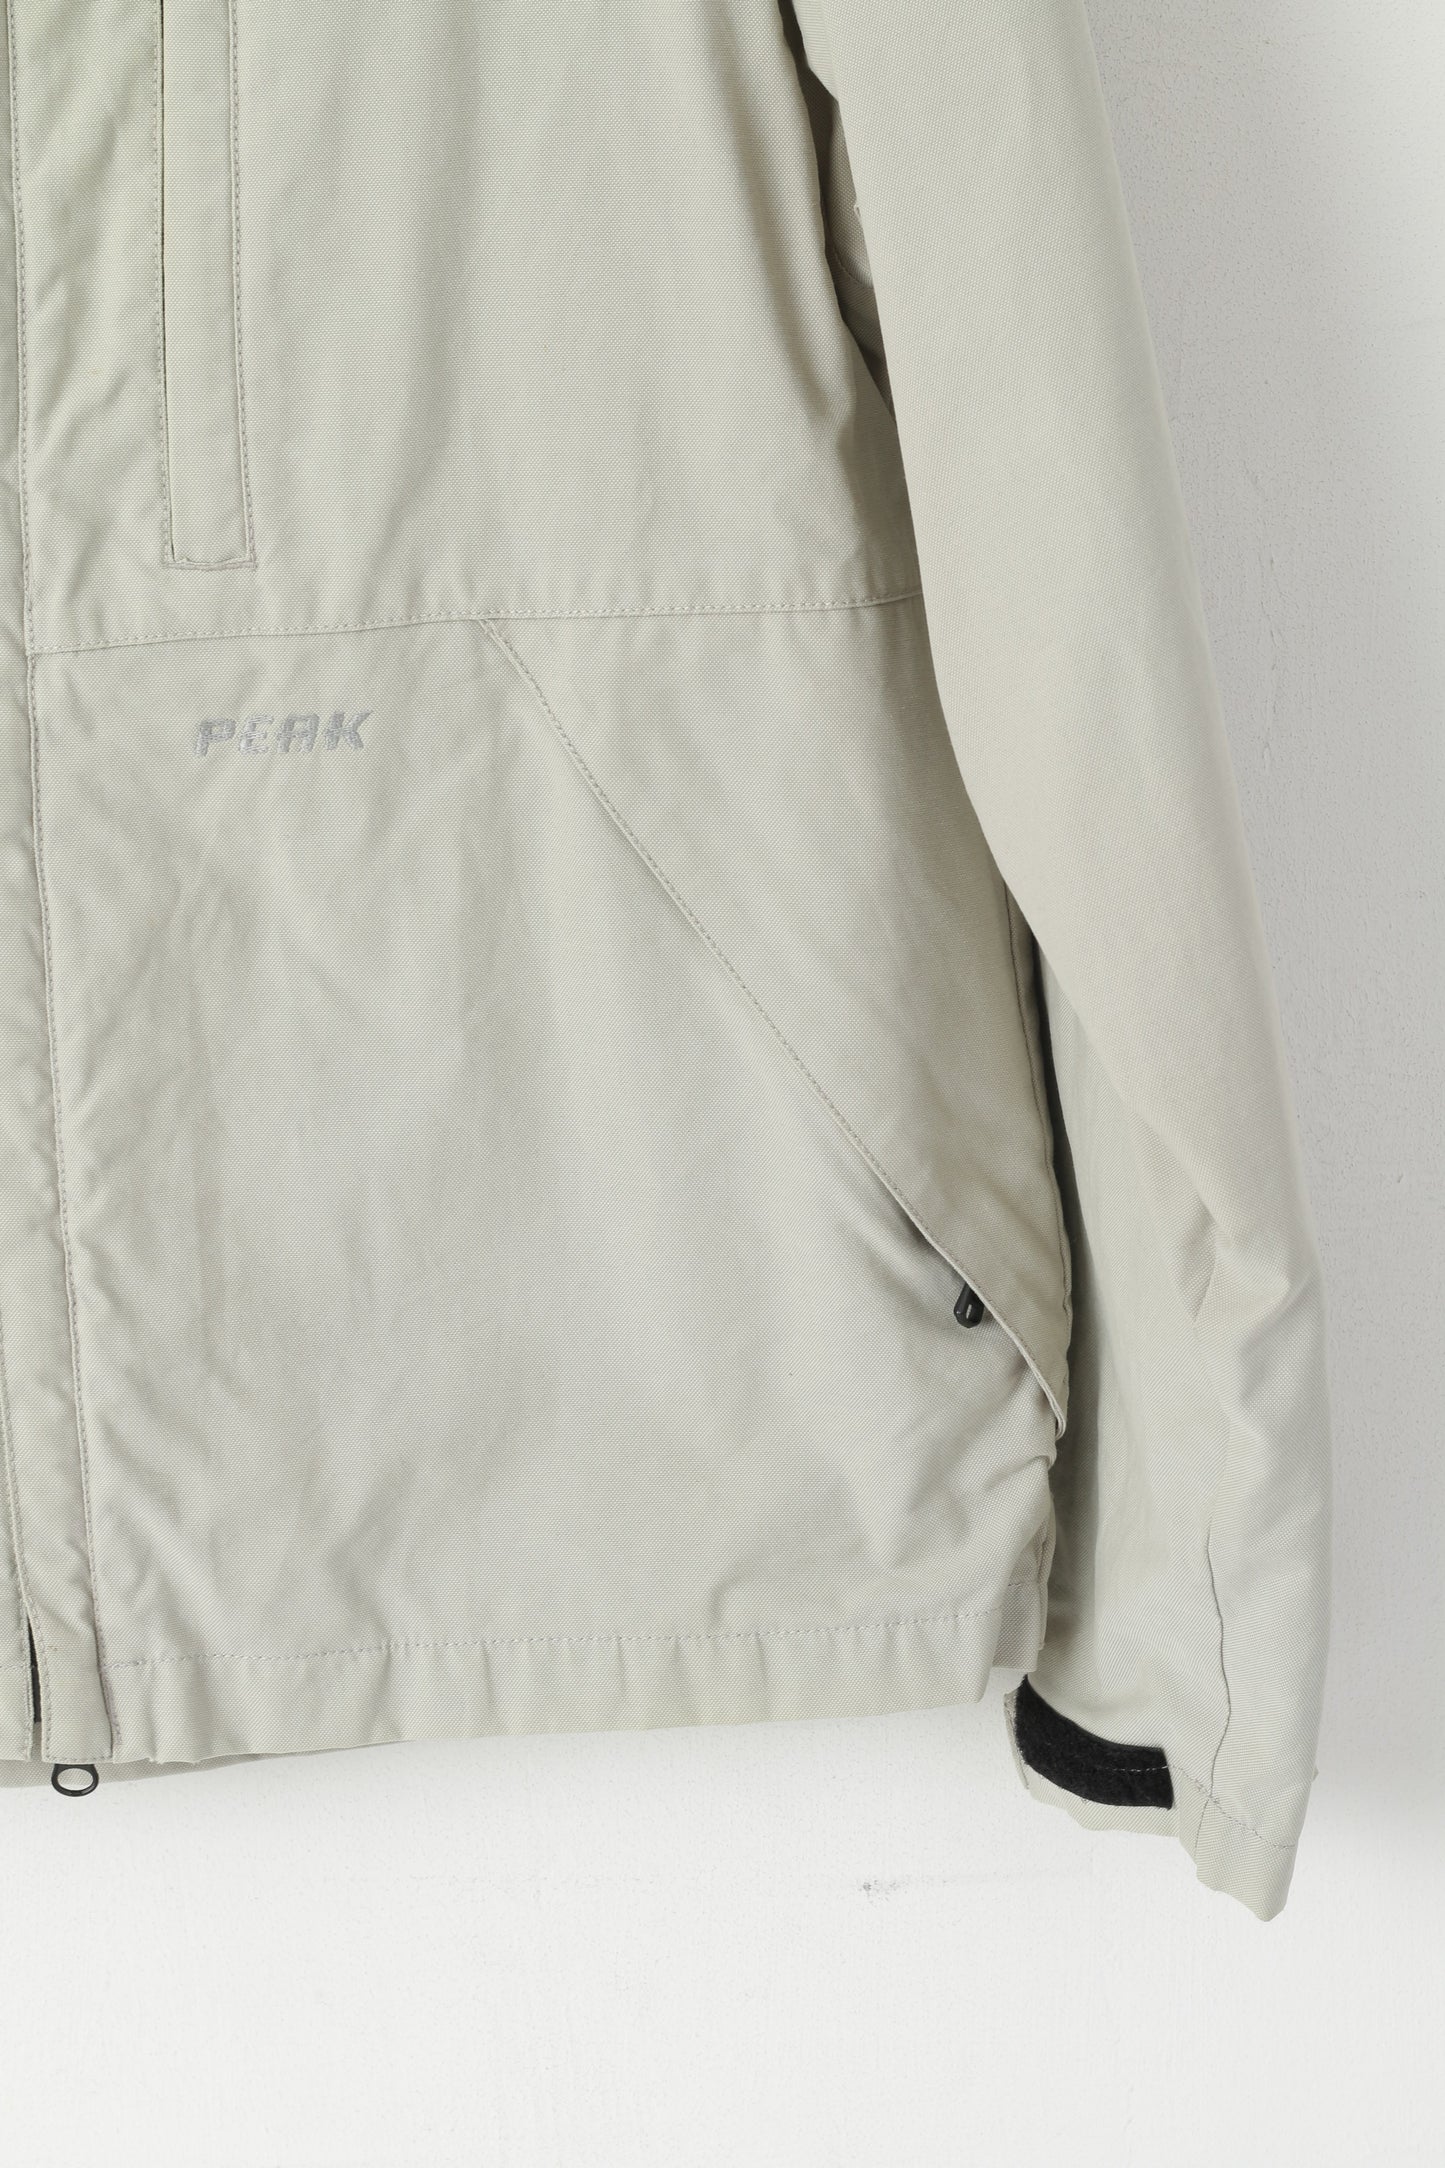 Peak Performance Men M Jacket Grey Cotton Nylon Blend Outdoor Full Zipper Top